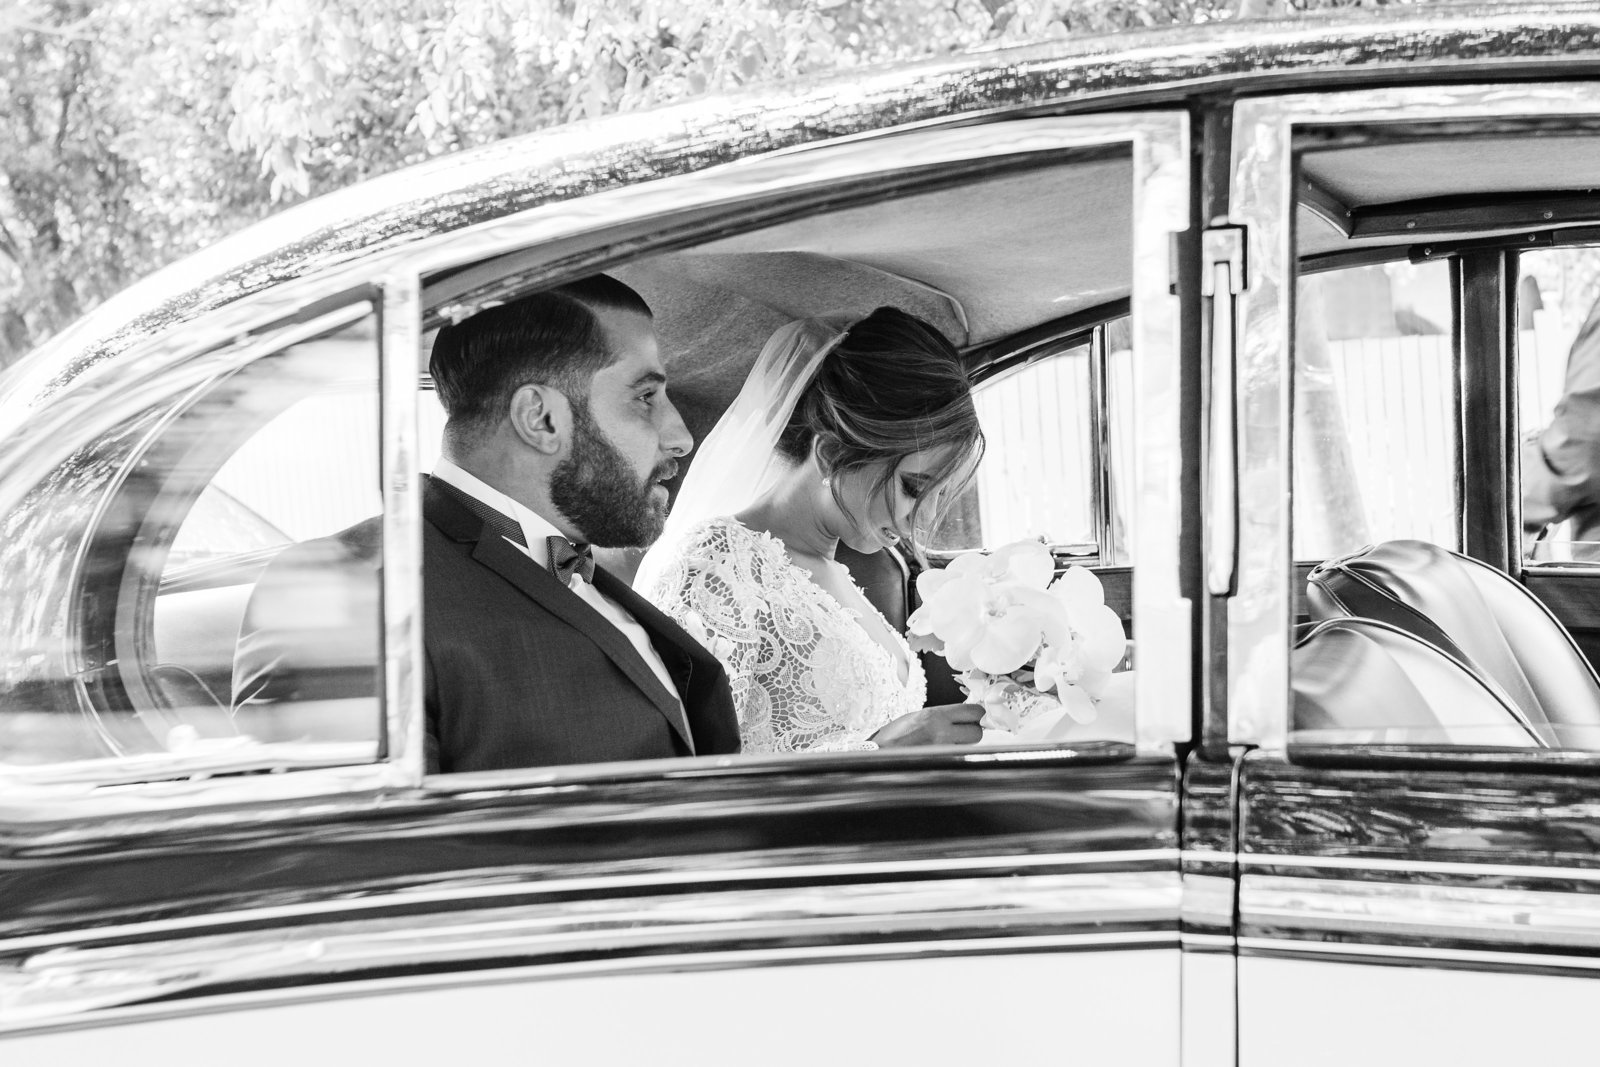 Stylish Turkish bride and groom sitting in vintage wedding car